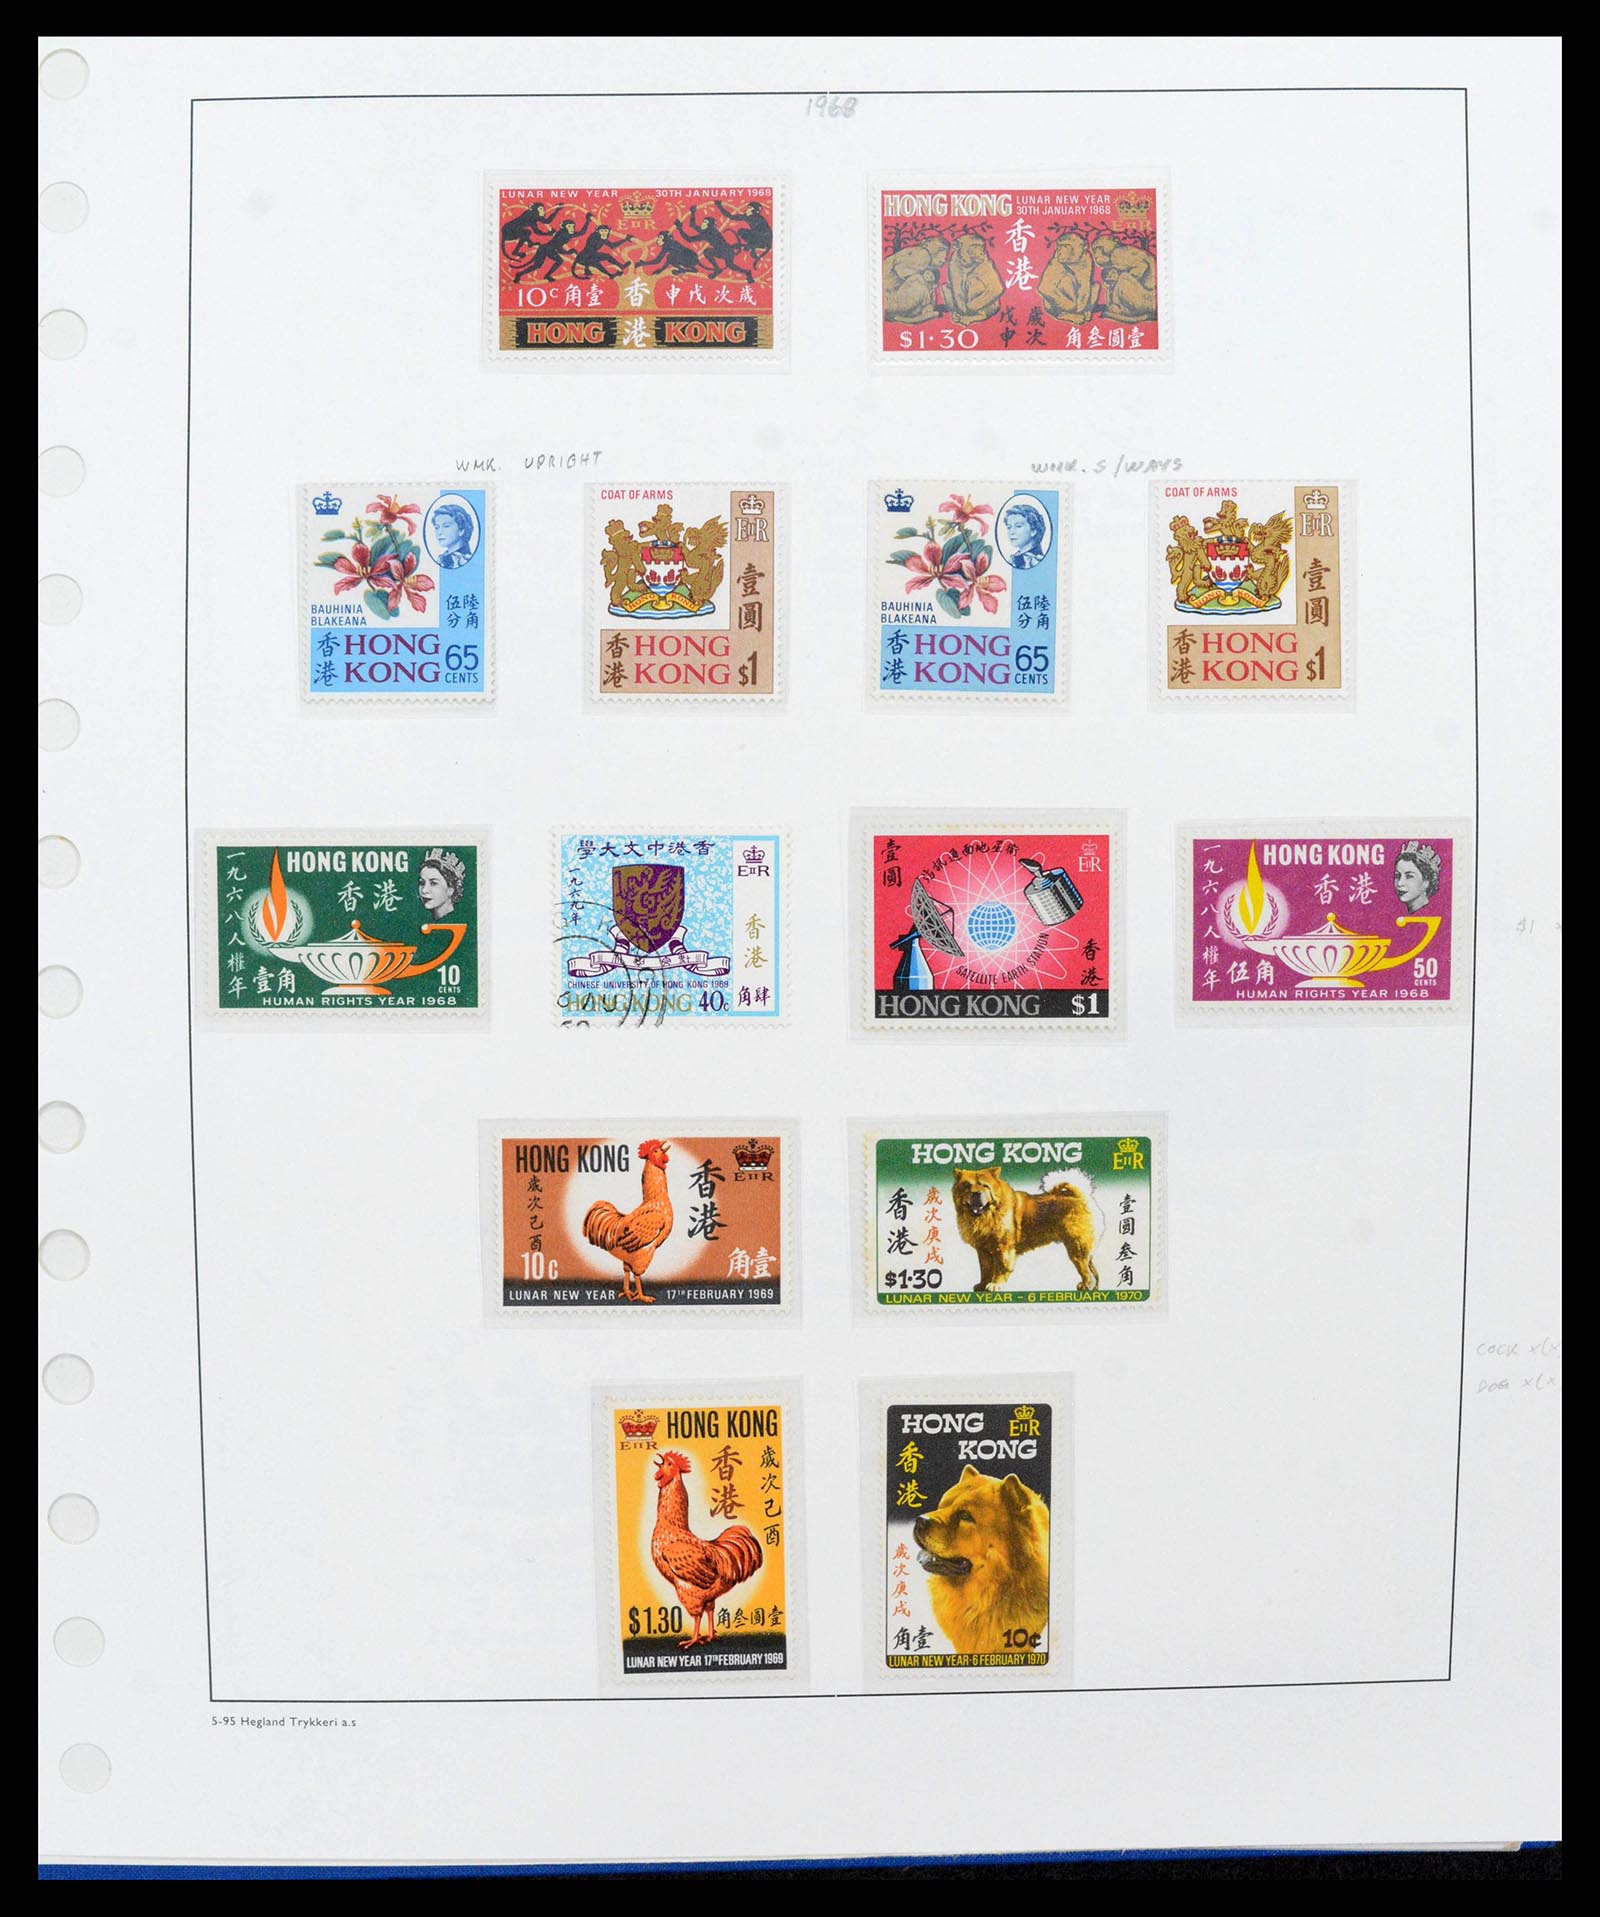 37955 0058 - Stamp collection 37955 Hong Kong supercollection 1862-2007.